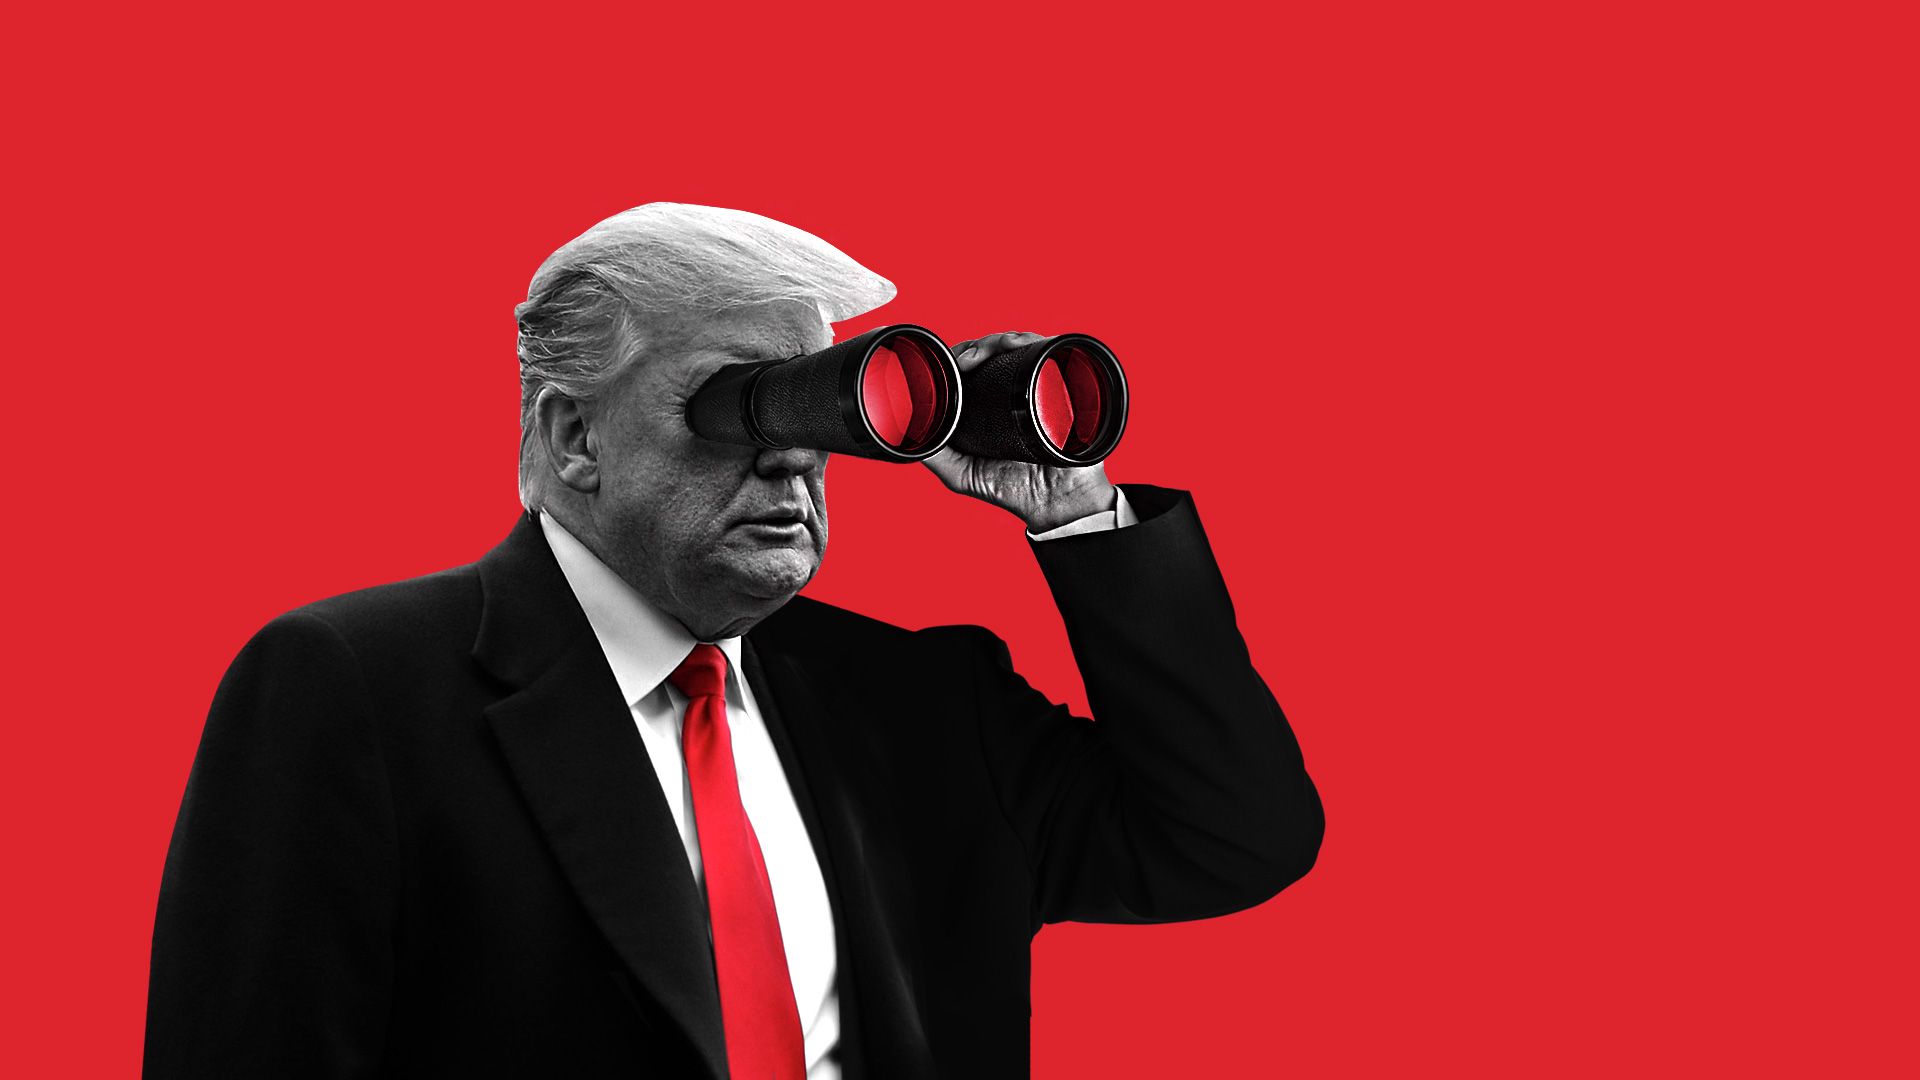  Trump peering into the distance with binoculars